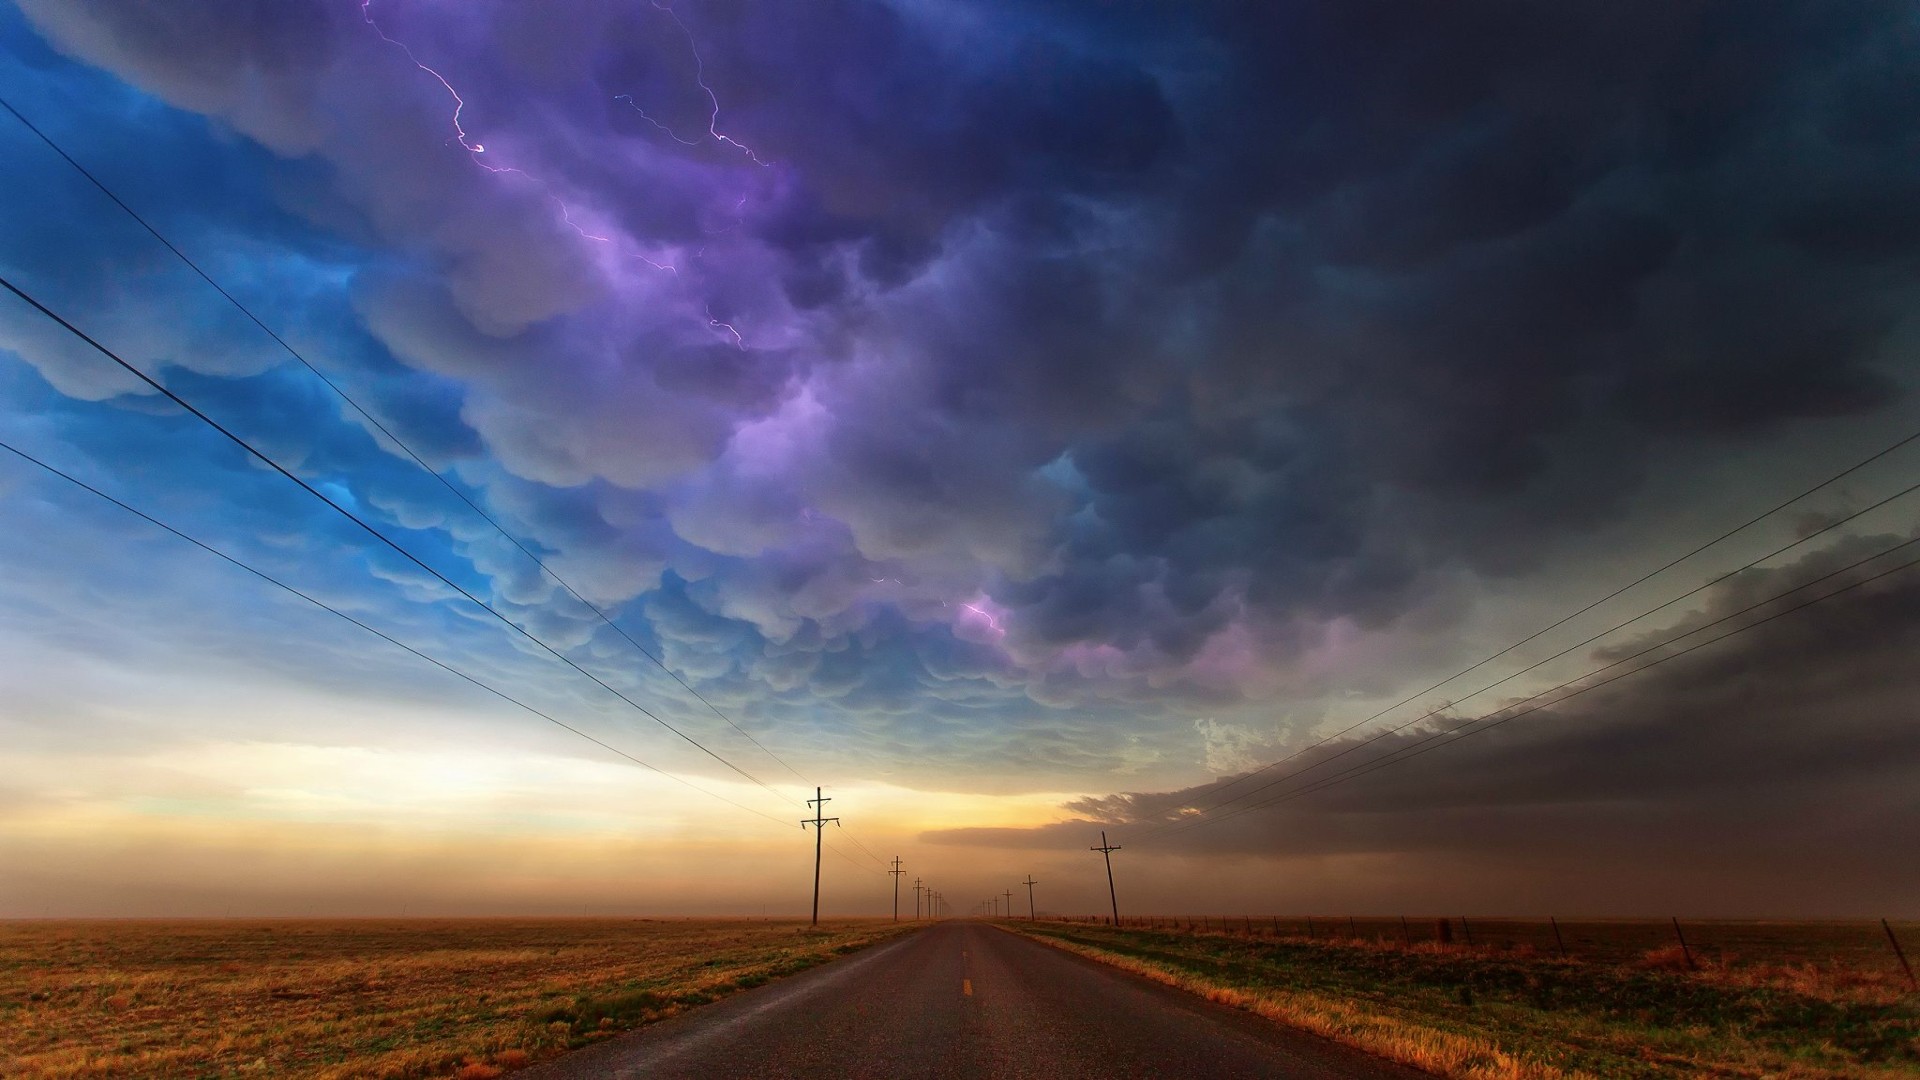 General 1920x1080 clouds road lightning power lines storm plains purple far view blue long road